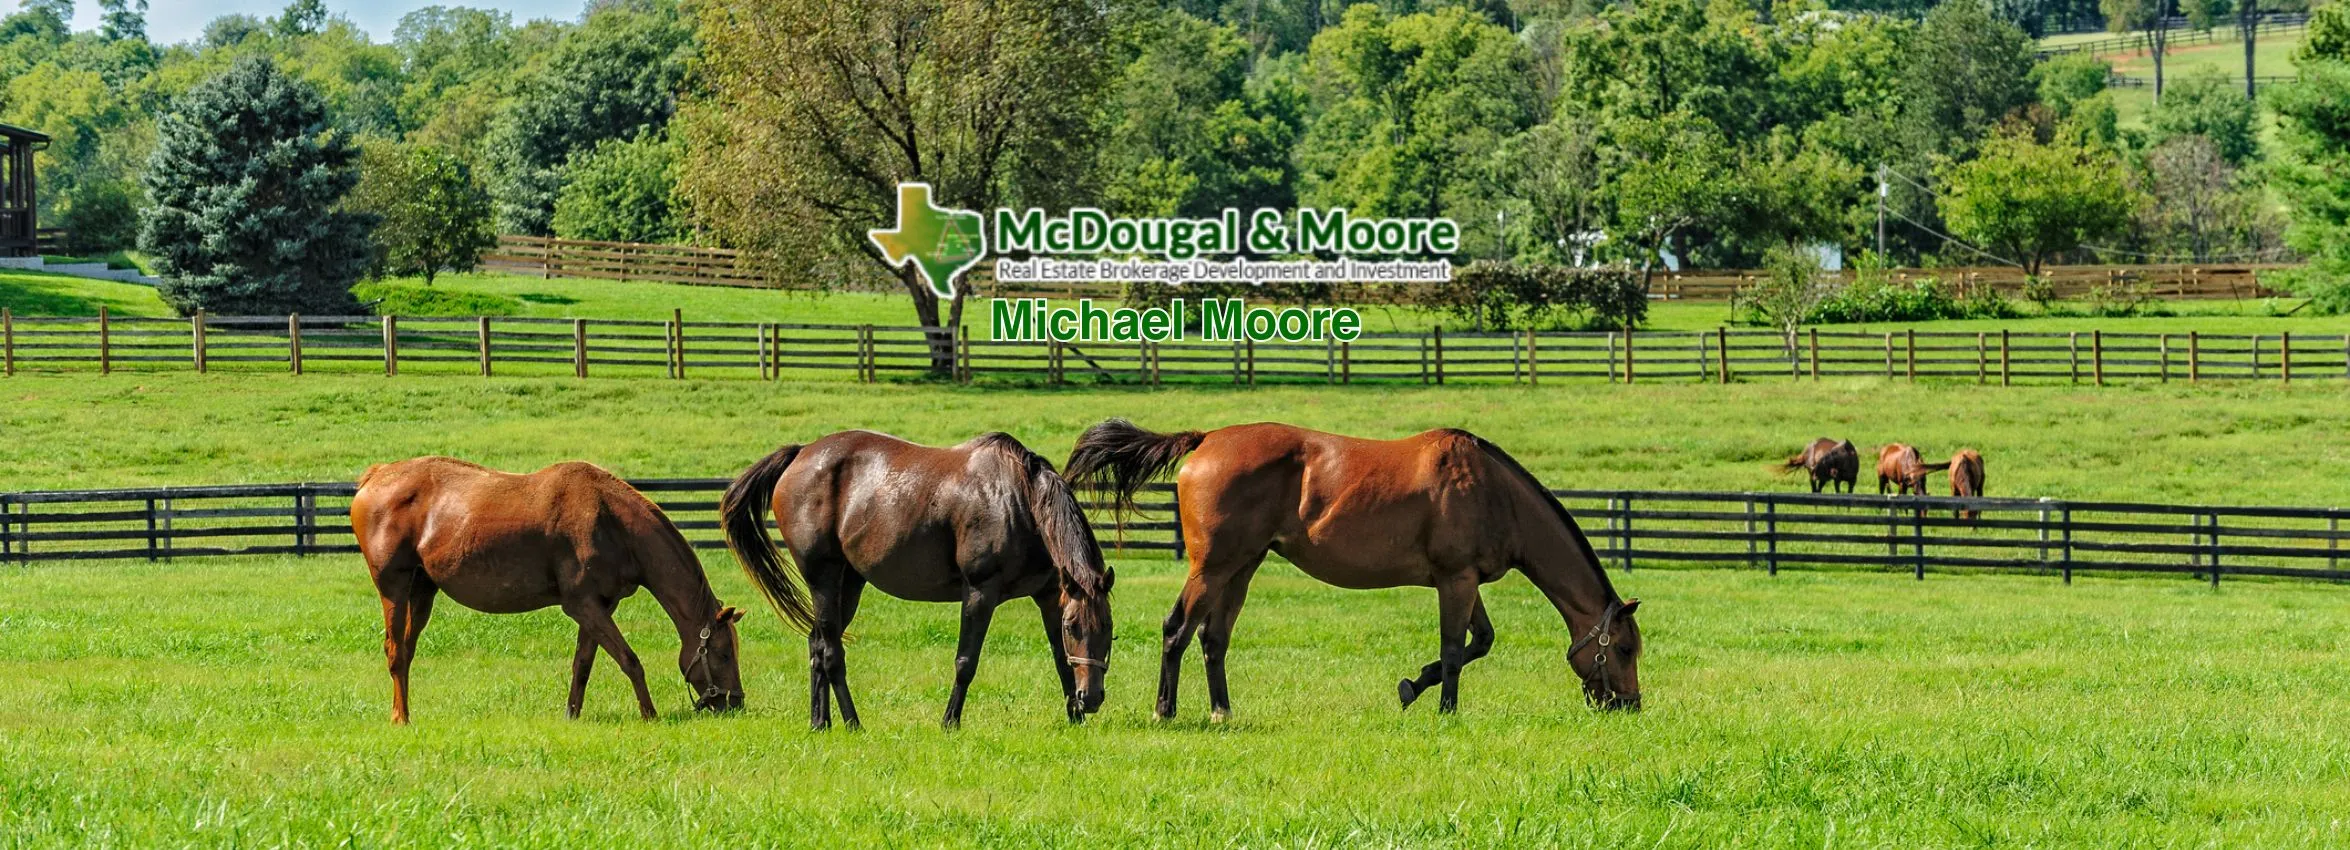 Michael-Moore-McDougal-_-Moore_Desktop_ET